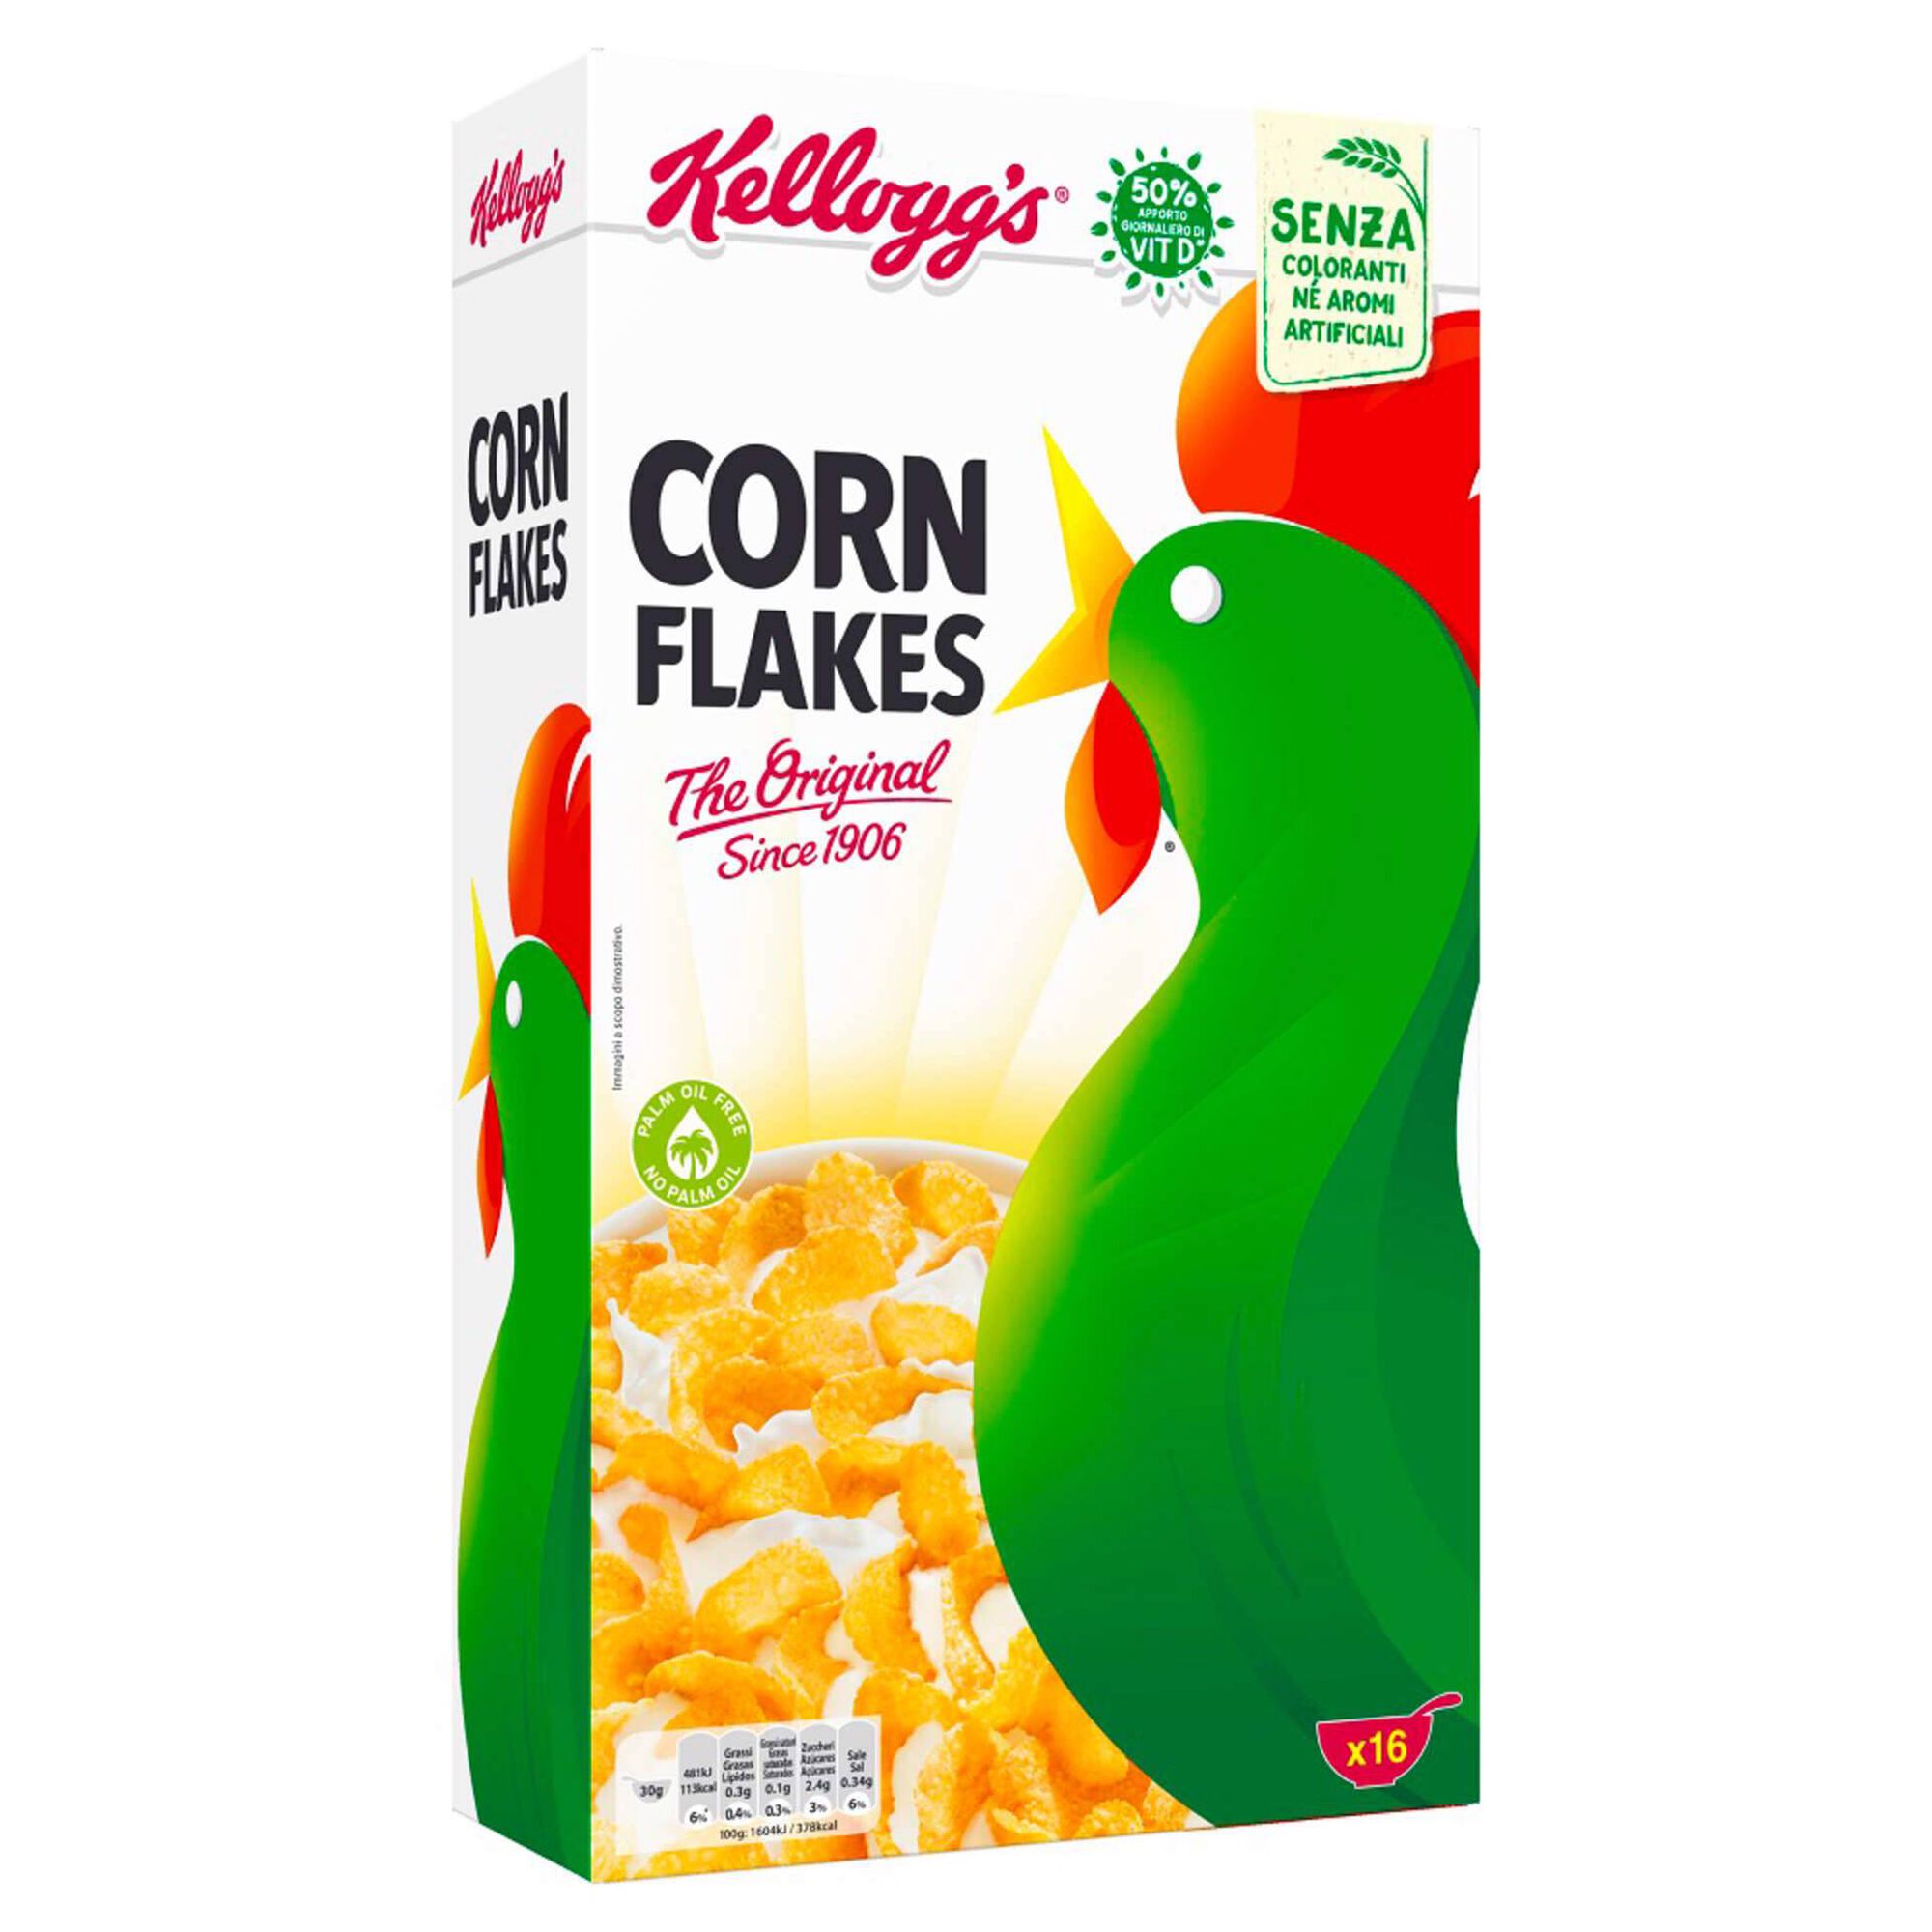 Cereais Corn Flakes